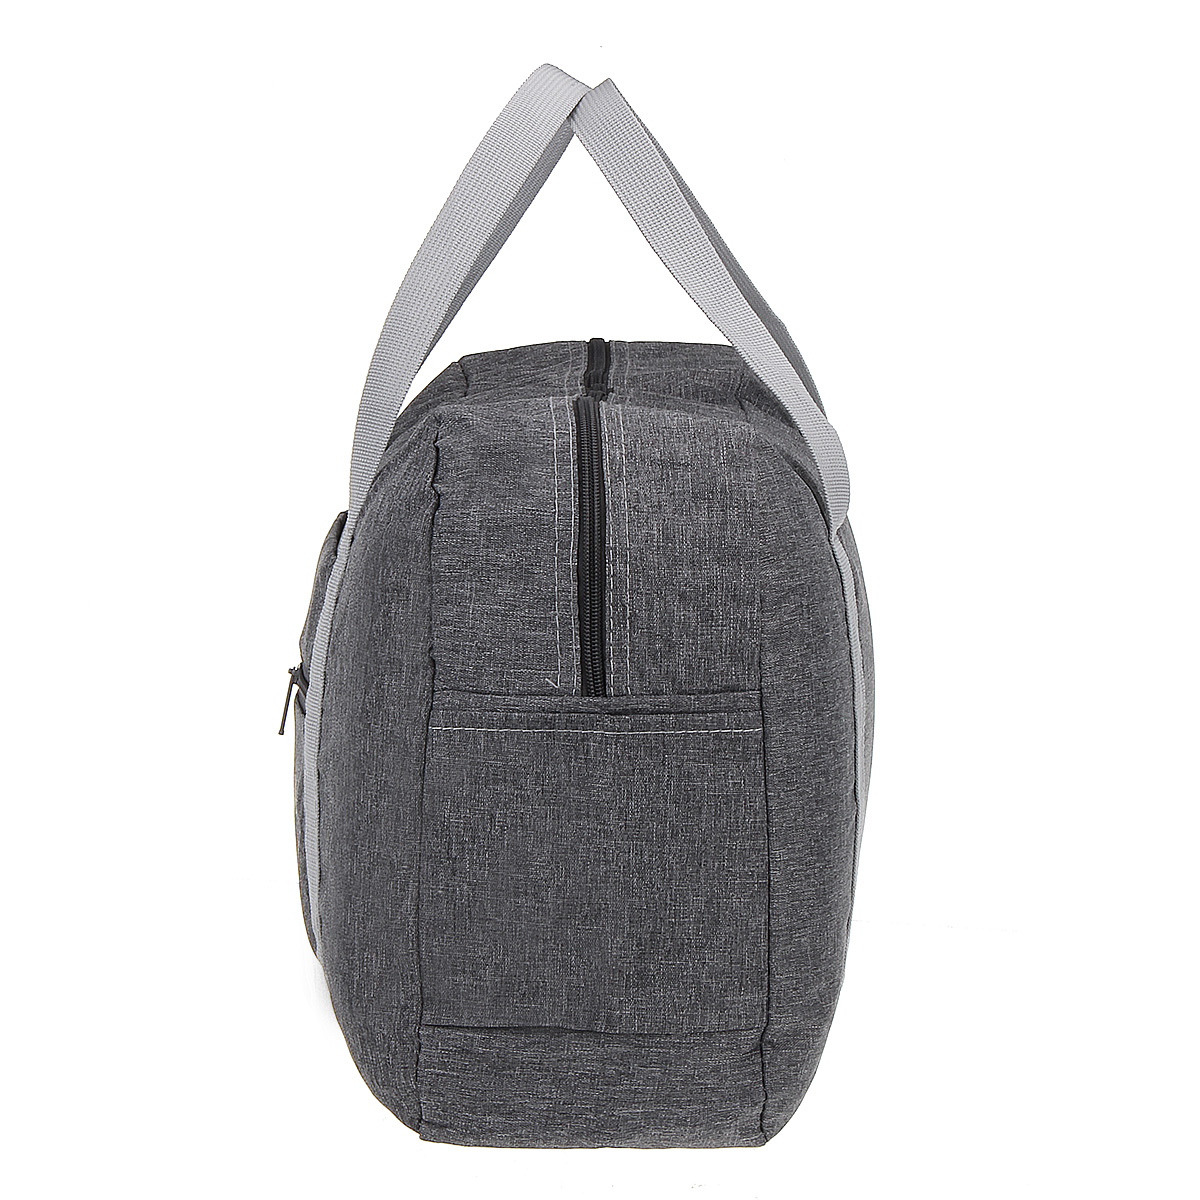 Oxford-Cloth-40x30x13cm-Foldable-Travel-Storage-Bag-Waterproof--Luggage-Bag-Hand-Shoulder-Bag-Carry--1667293-4